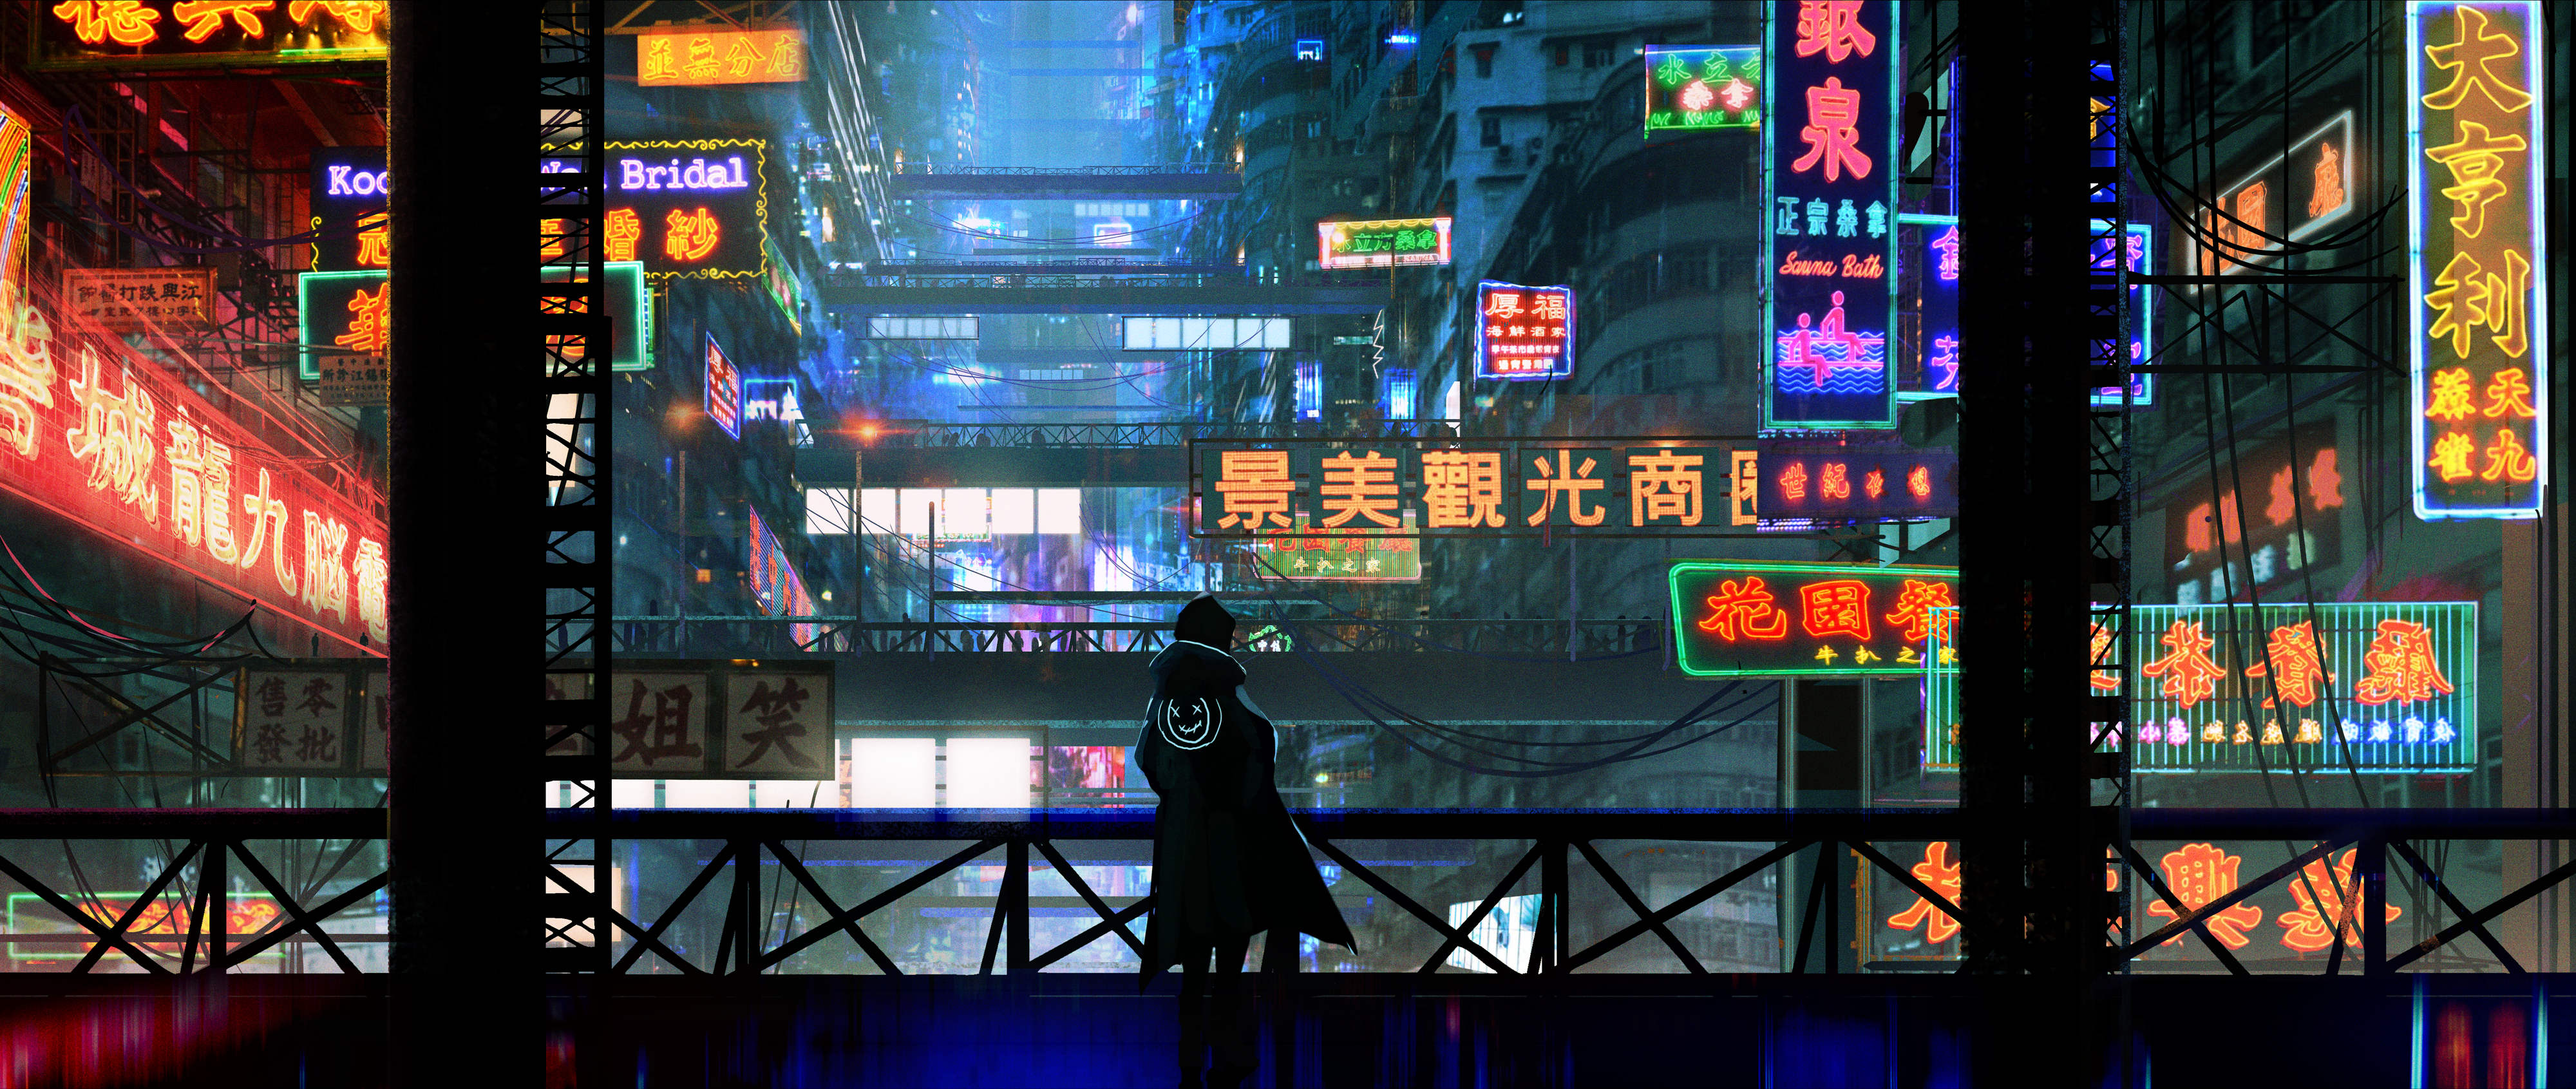 Digital Art Artwork Illustration Billboards Neon Neon Sign Futuristic Cyberpunk Bridge City Architec 4000x1691